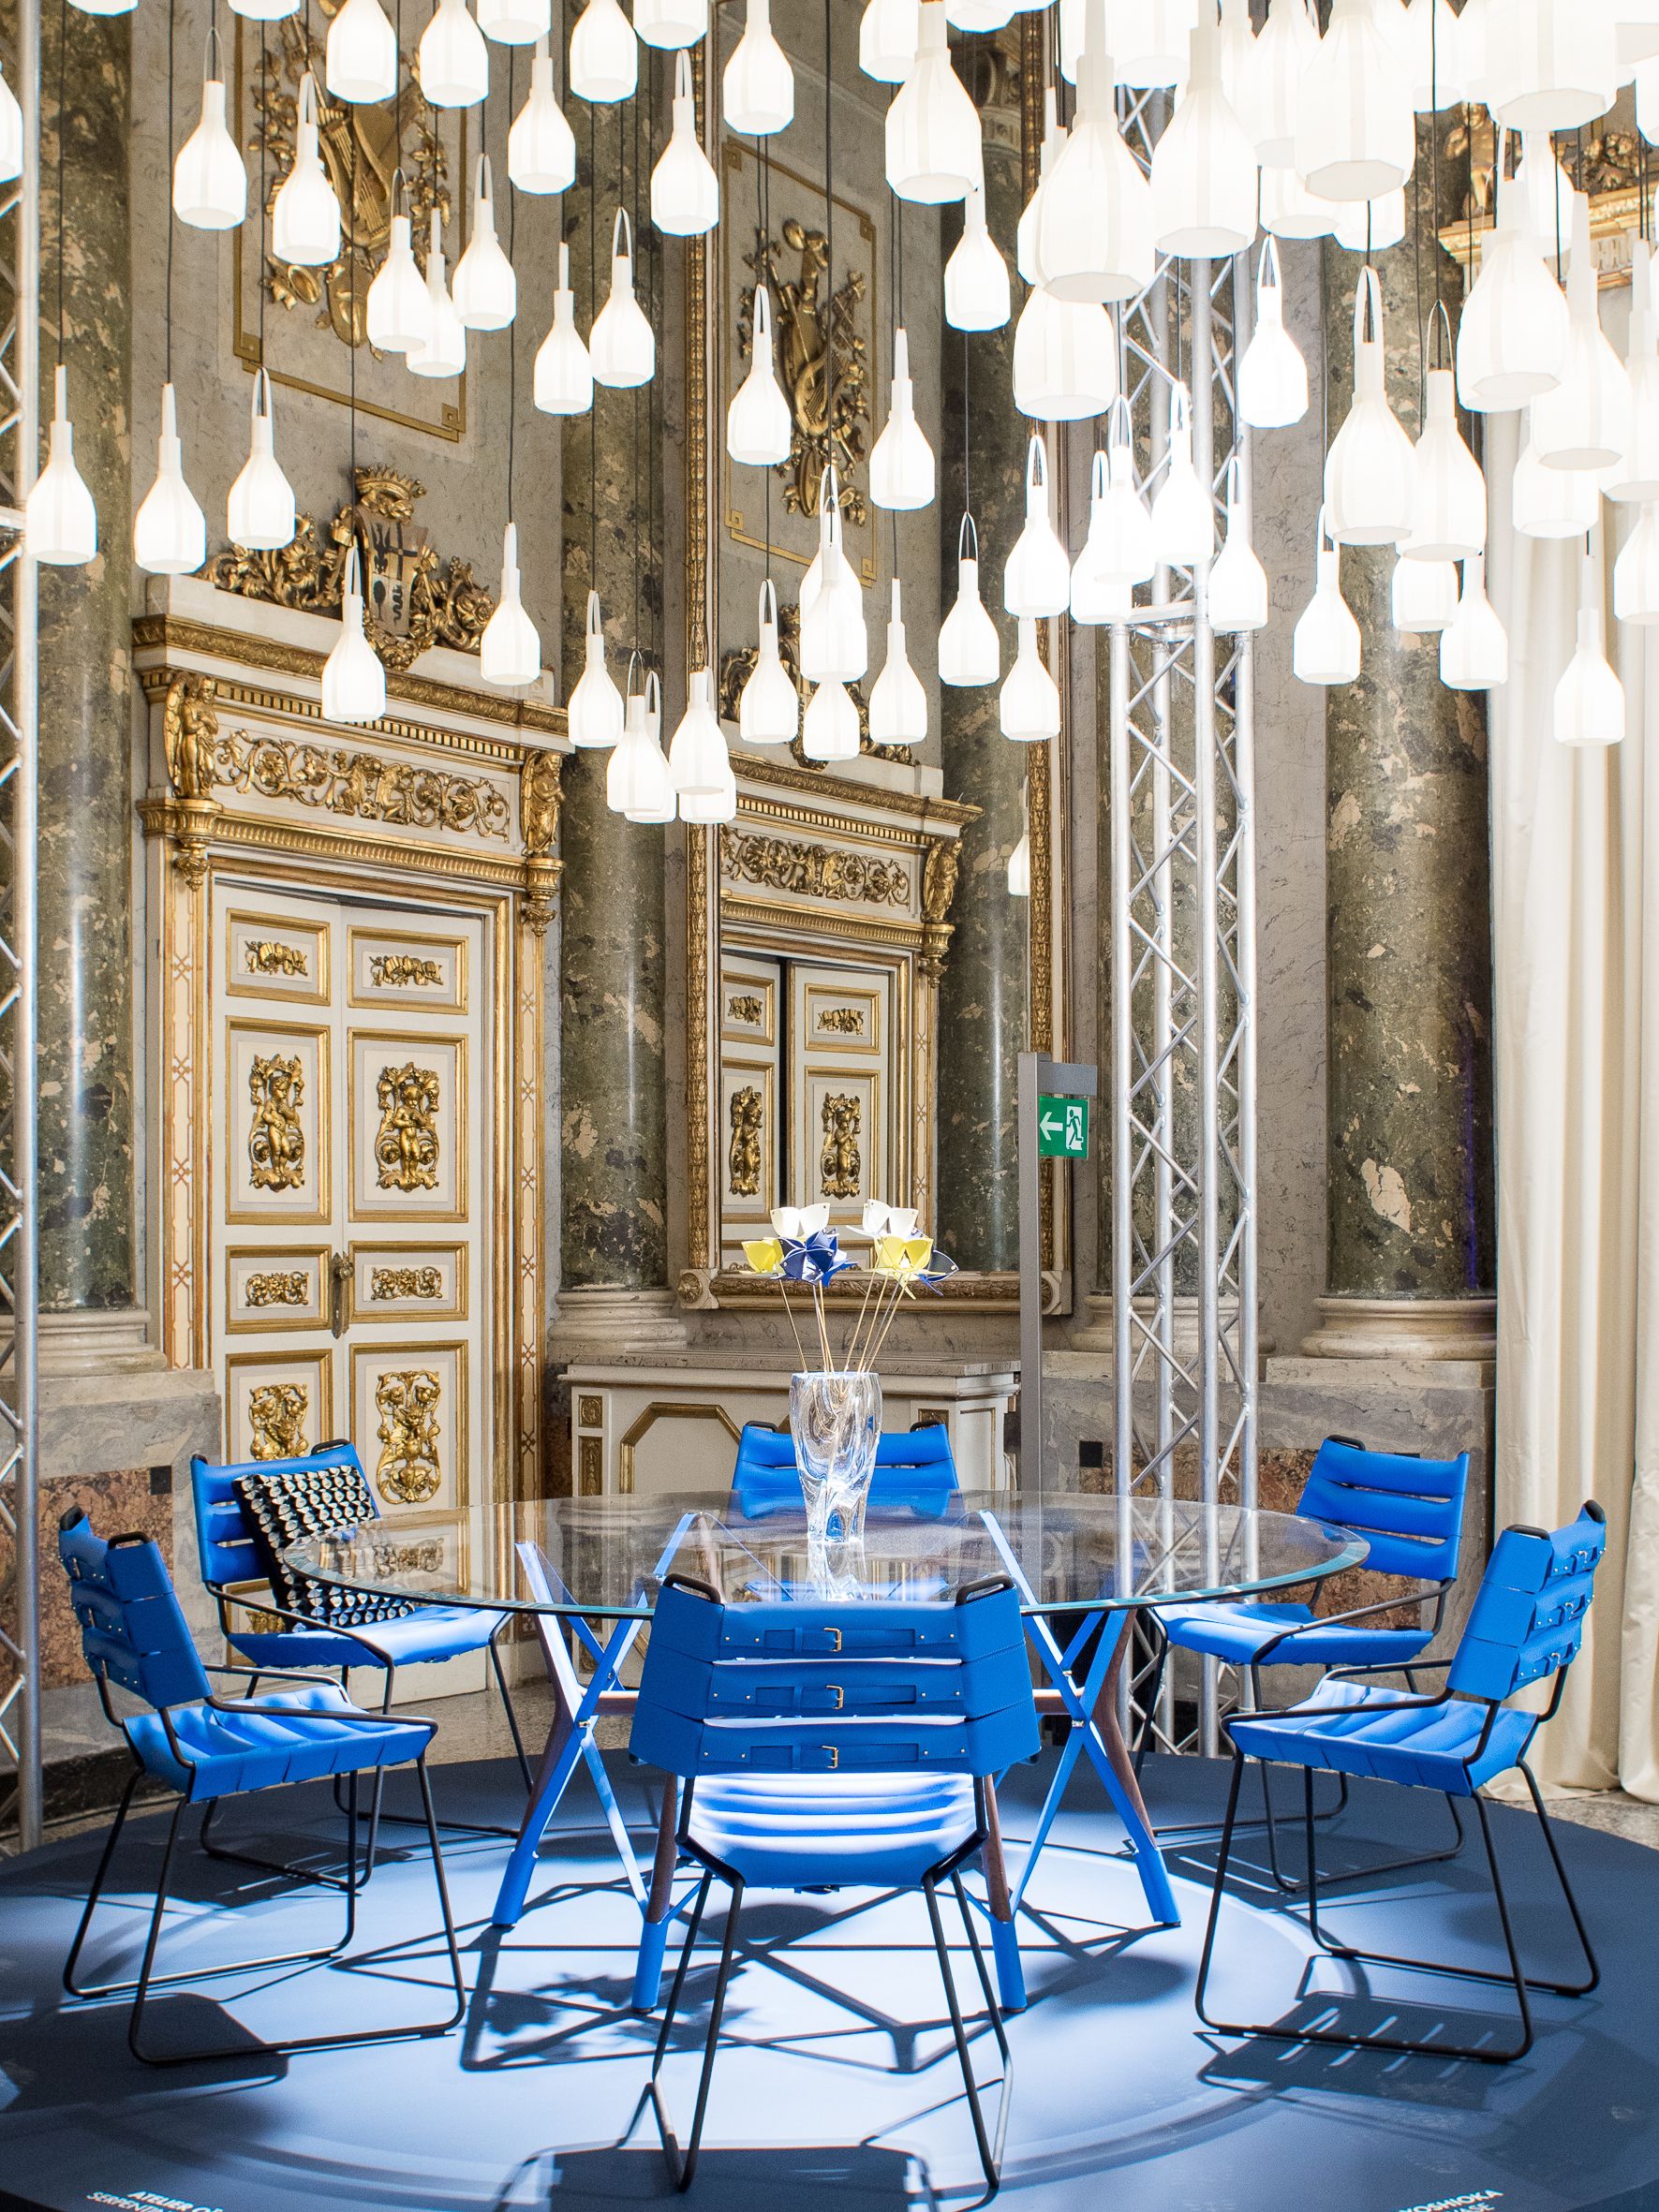 Louis Vuitton Objets Nomades Palazzo Serbelloni - Salone 2019 on Vimeo